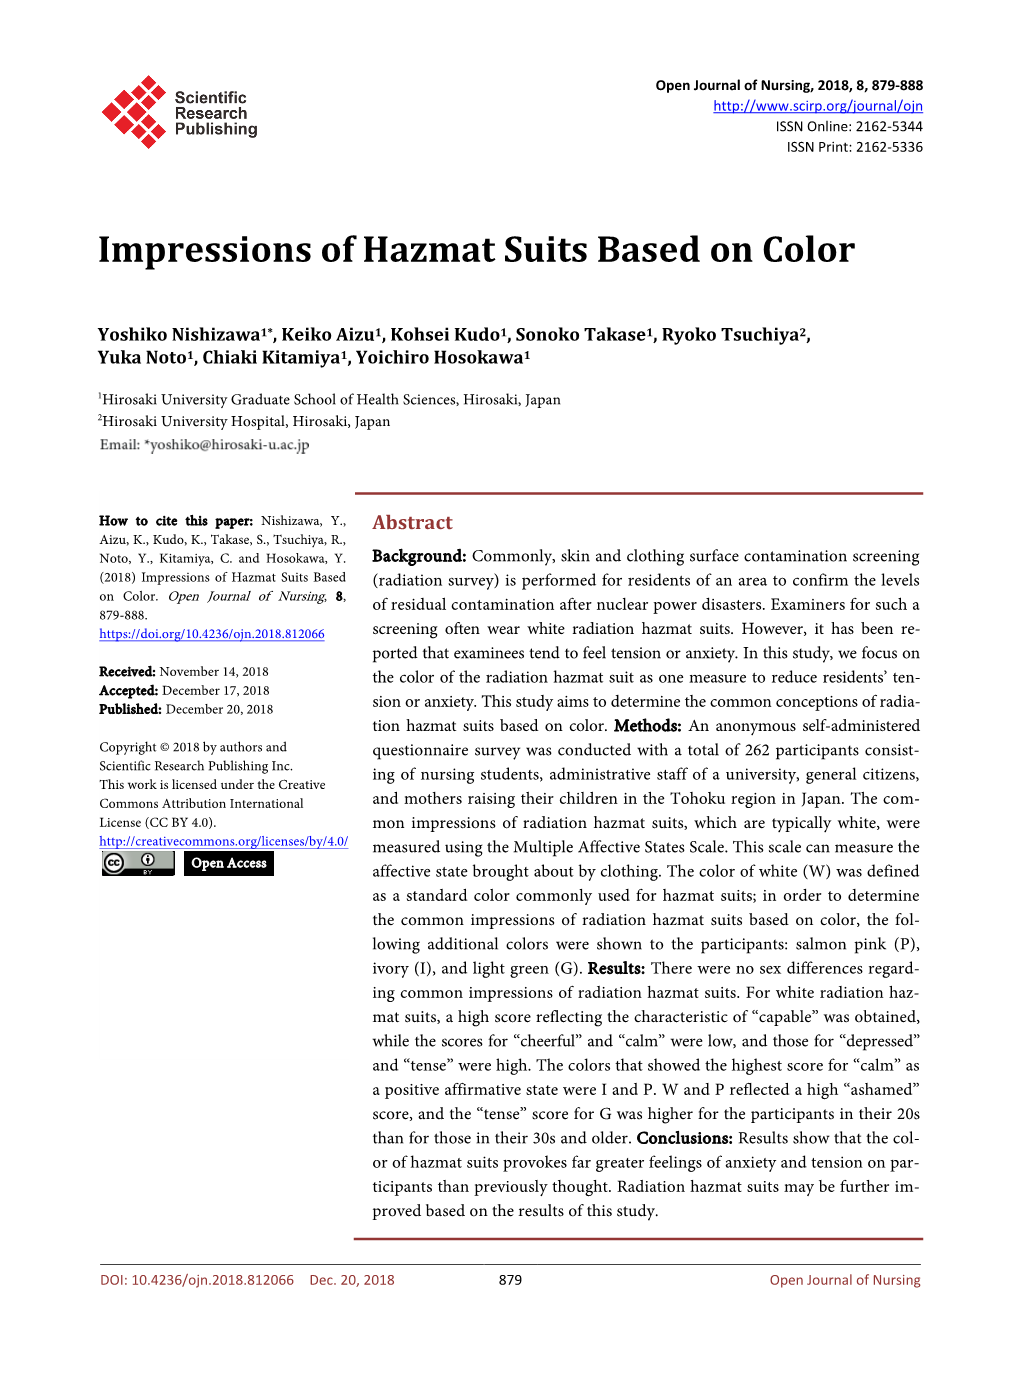 Impressions of Hazmat Suits Based on Color